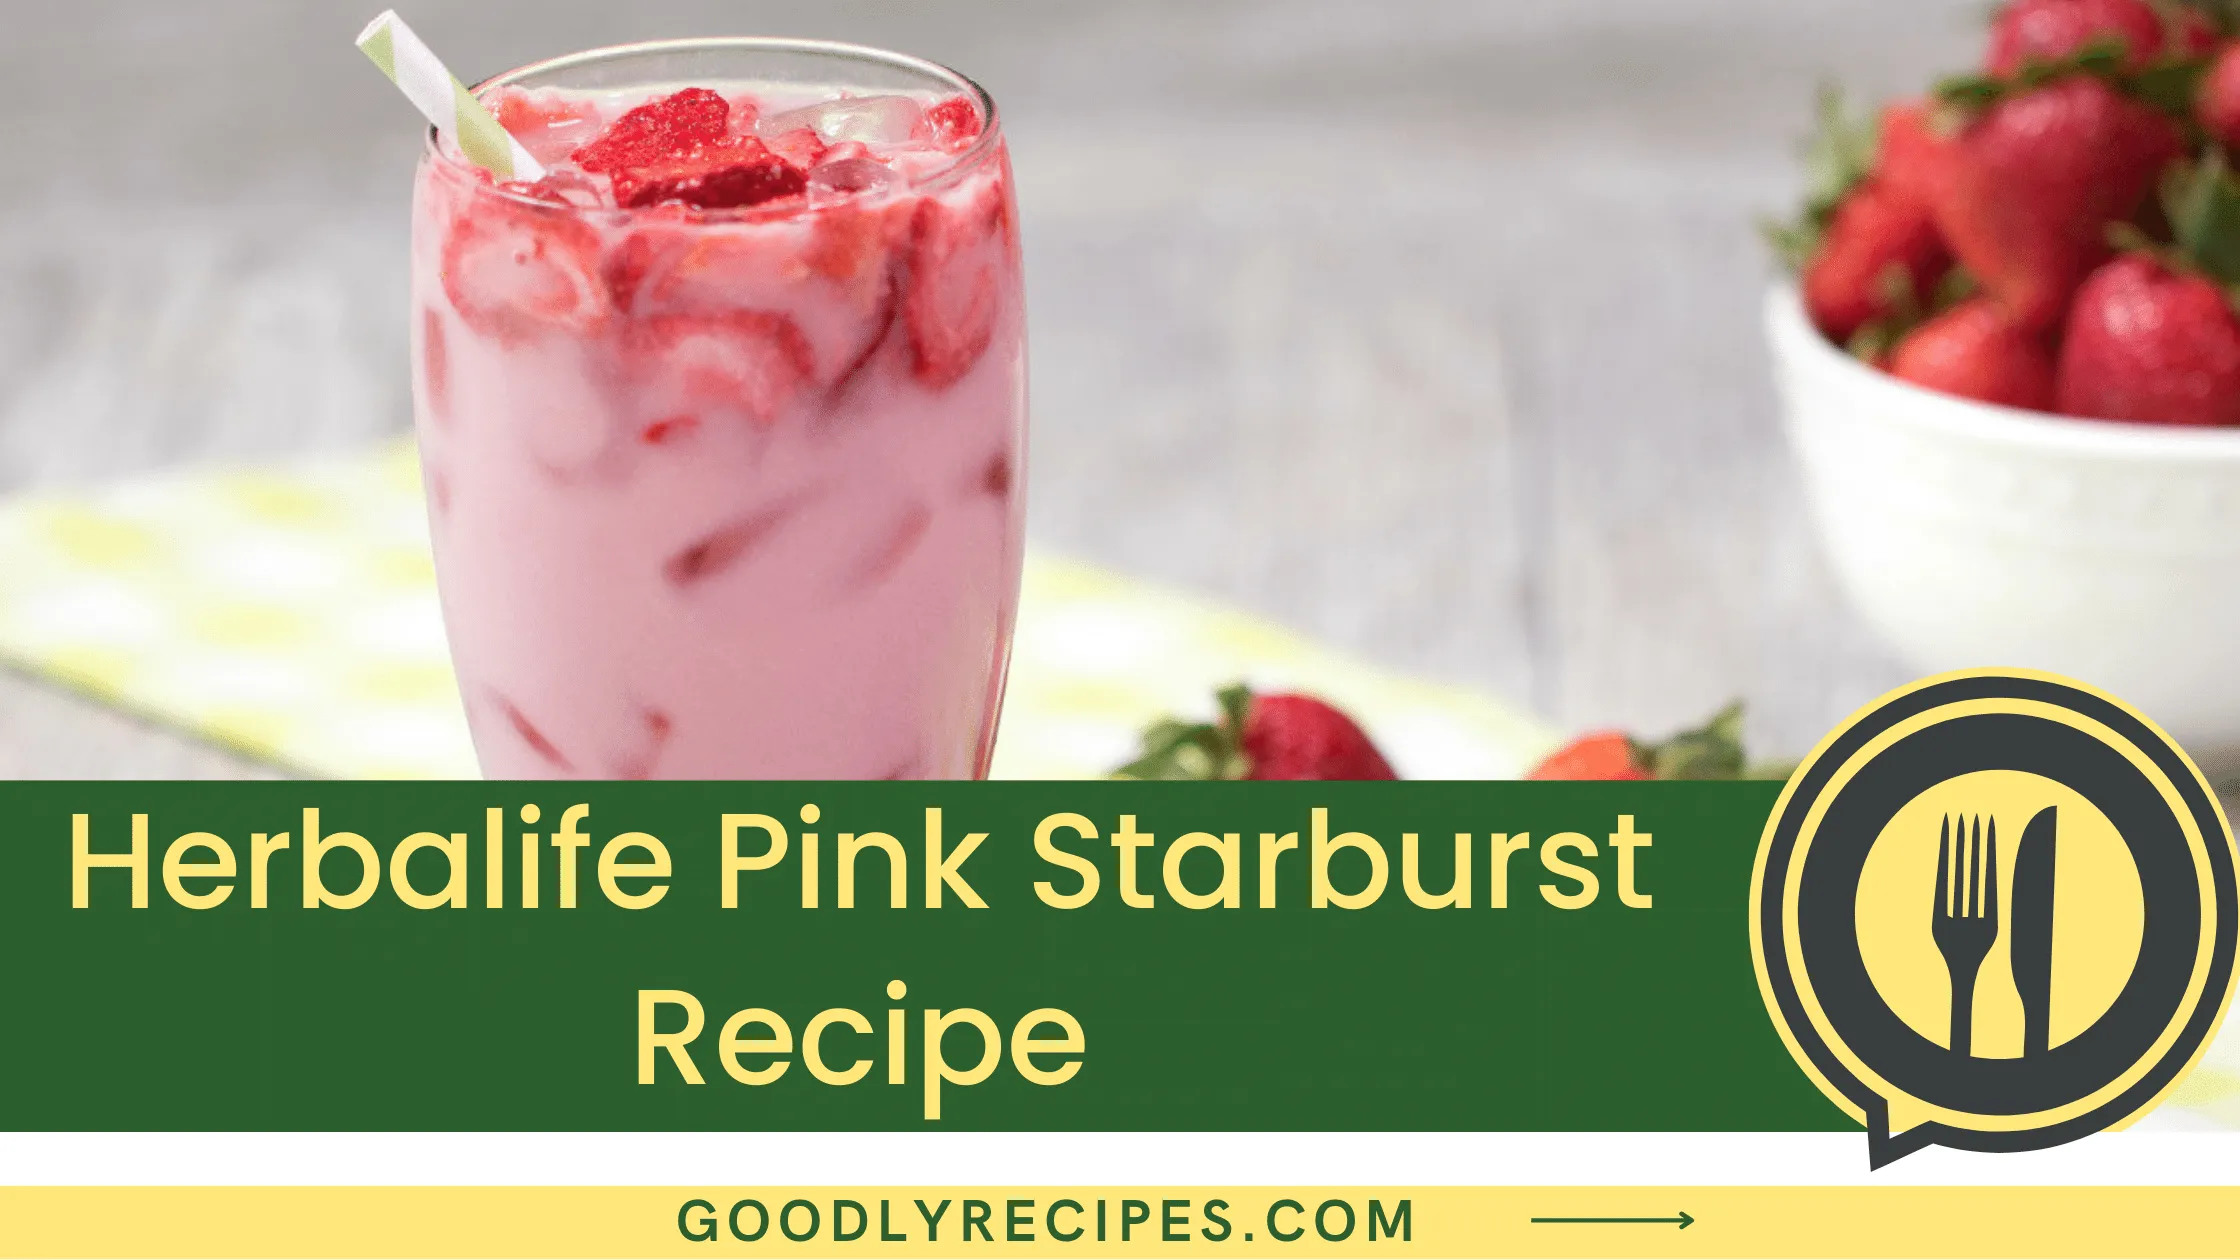 Herbalife Pink Starburst Recipe - For Food Lovers